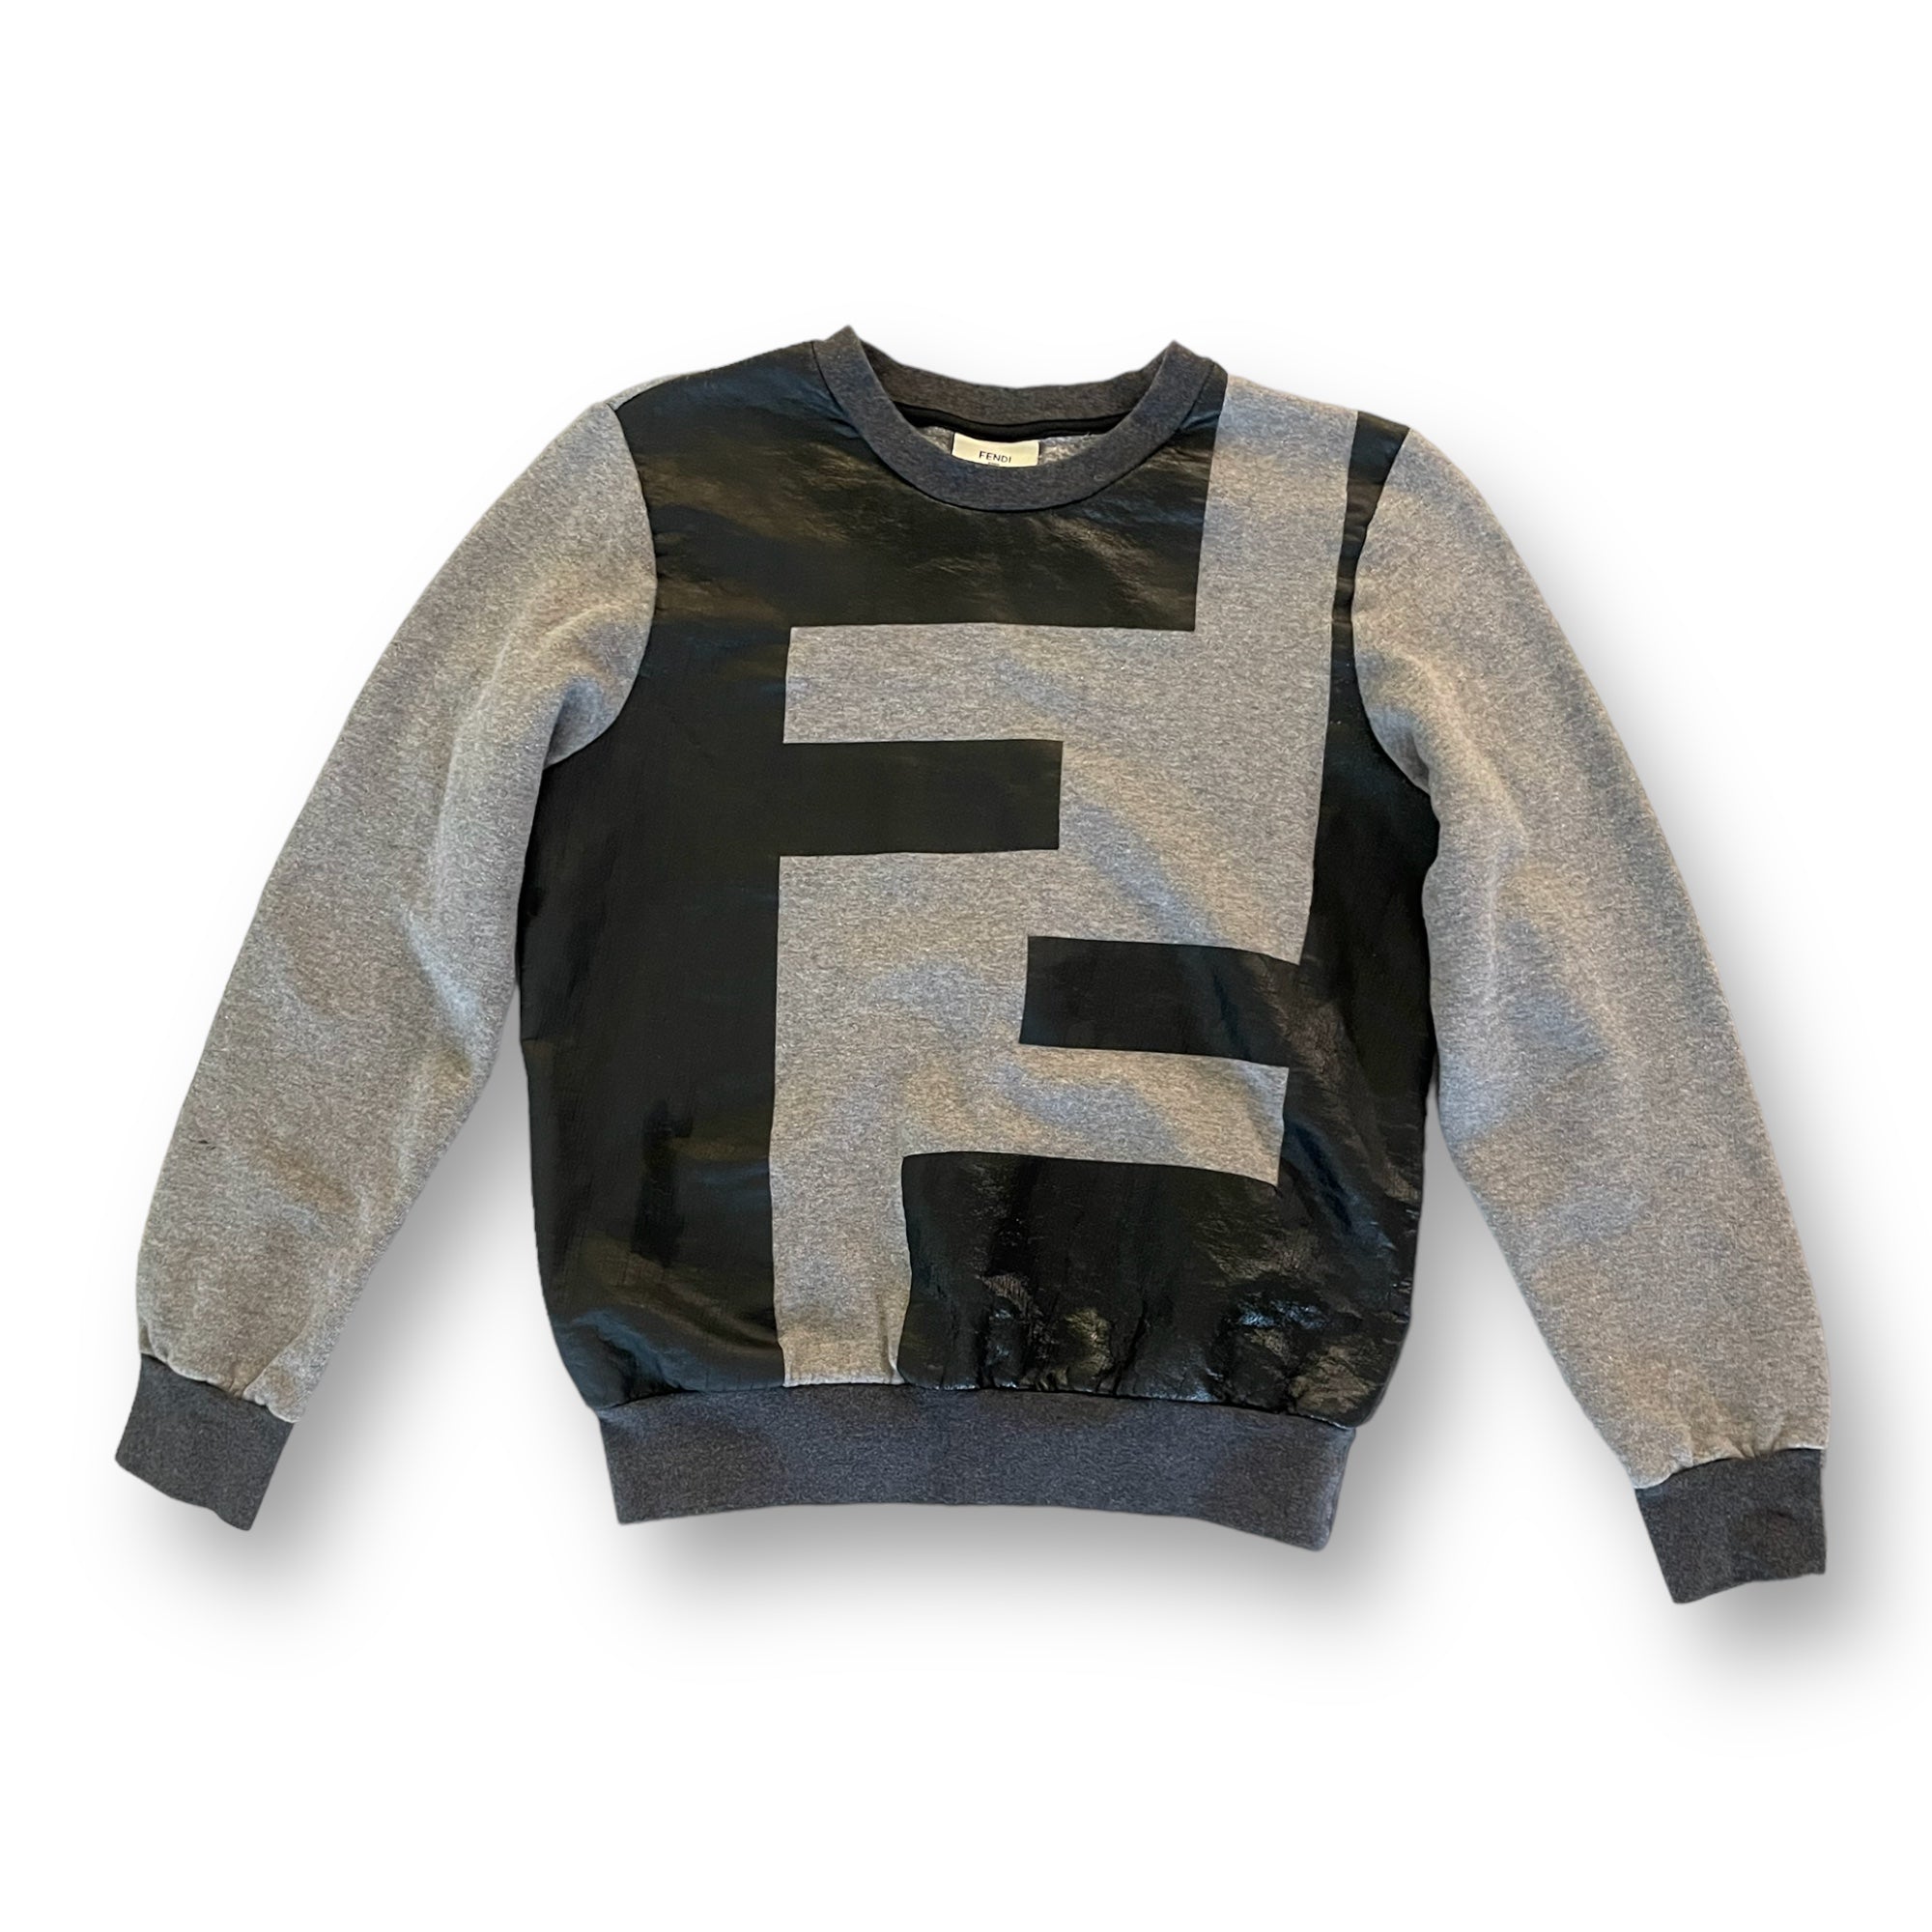 FENDI Double FF Motif Grey & Black Sweater |Size: Youth 12A|